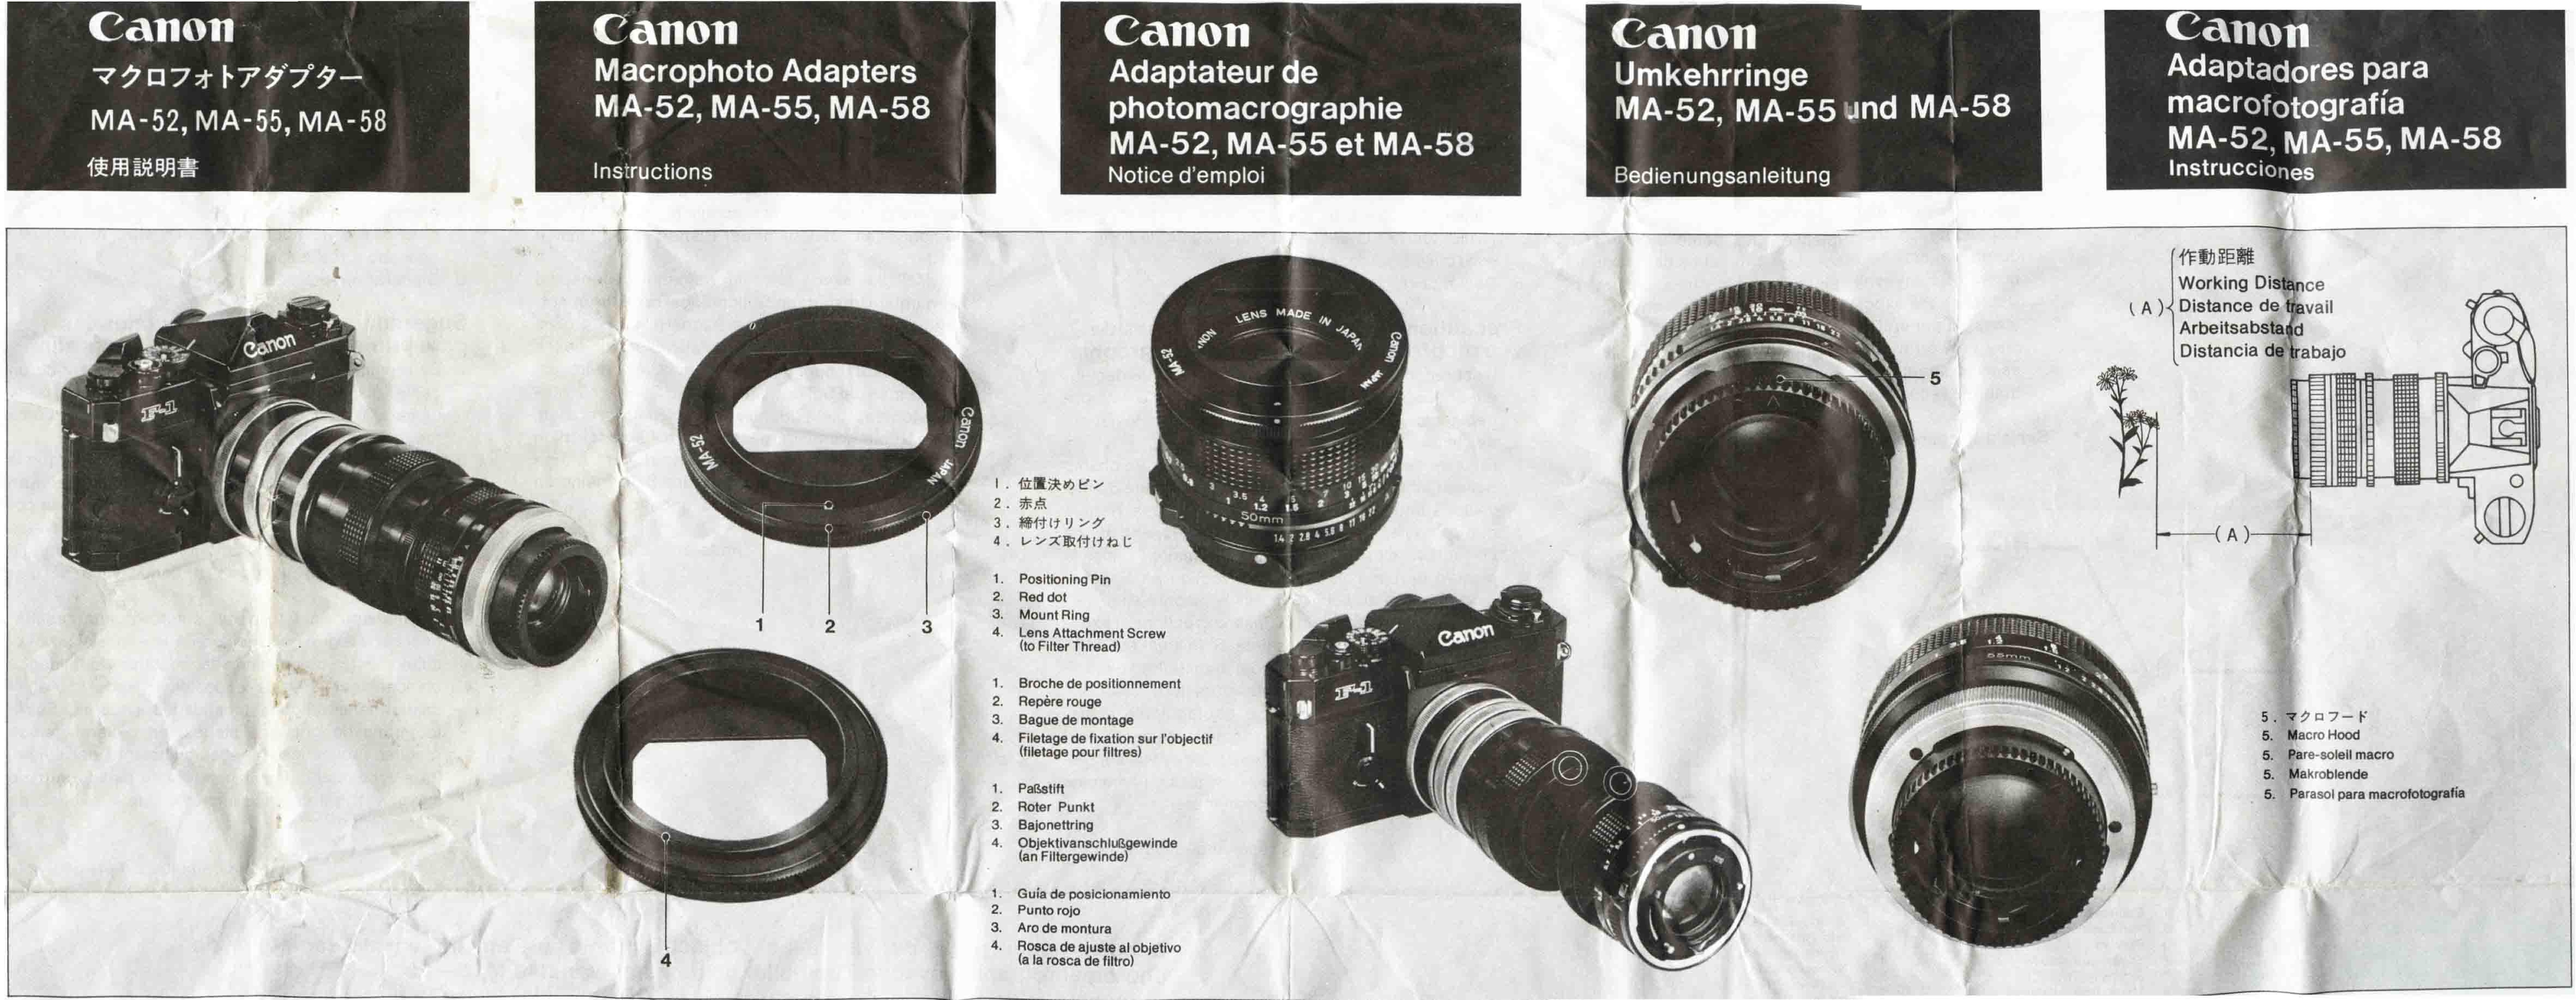 Canon MA-58 Network Card User Manual